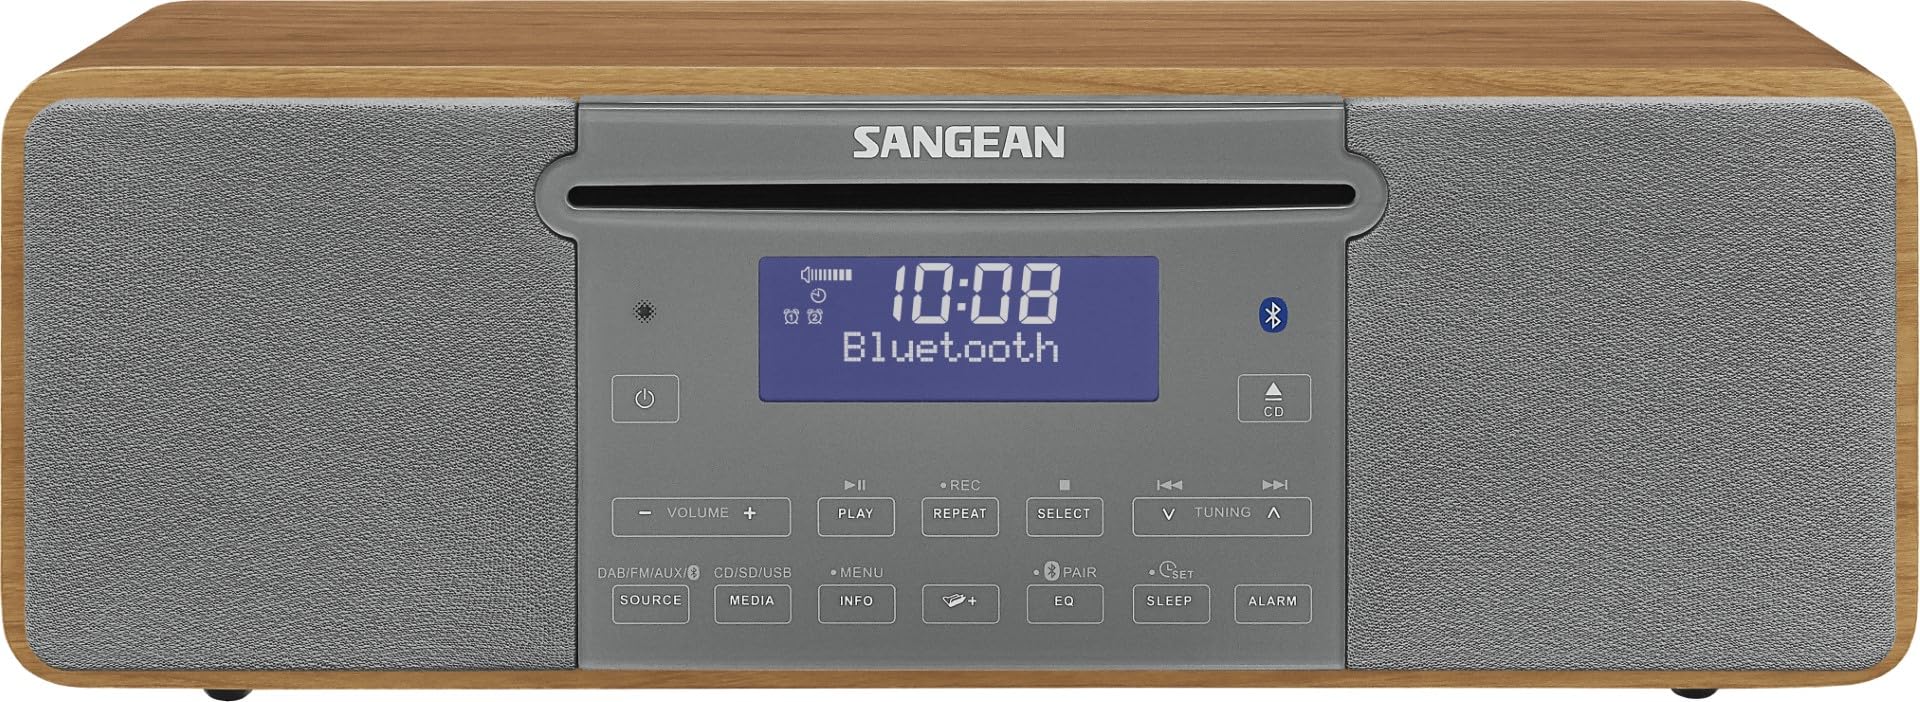 Sangean DDR-47BT All-in-One Kompakt-Anlage (DAB+/UKW-Tuner, Bluetooth, CD/MP3-Player, USB 2.0, SD-Kartenleser, AUX-In, Recording Funktion) inkl. Fernbedienung walnuss/grau